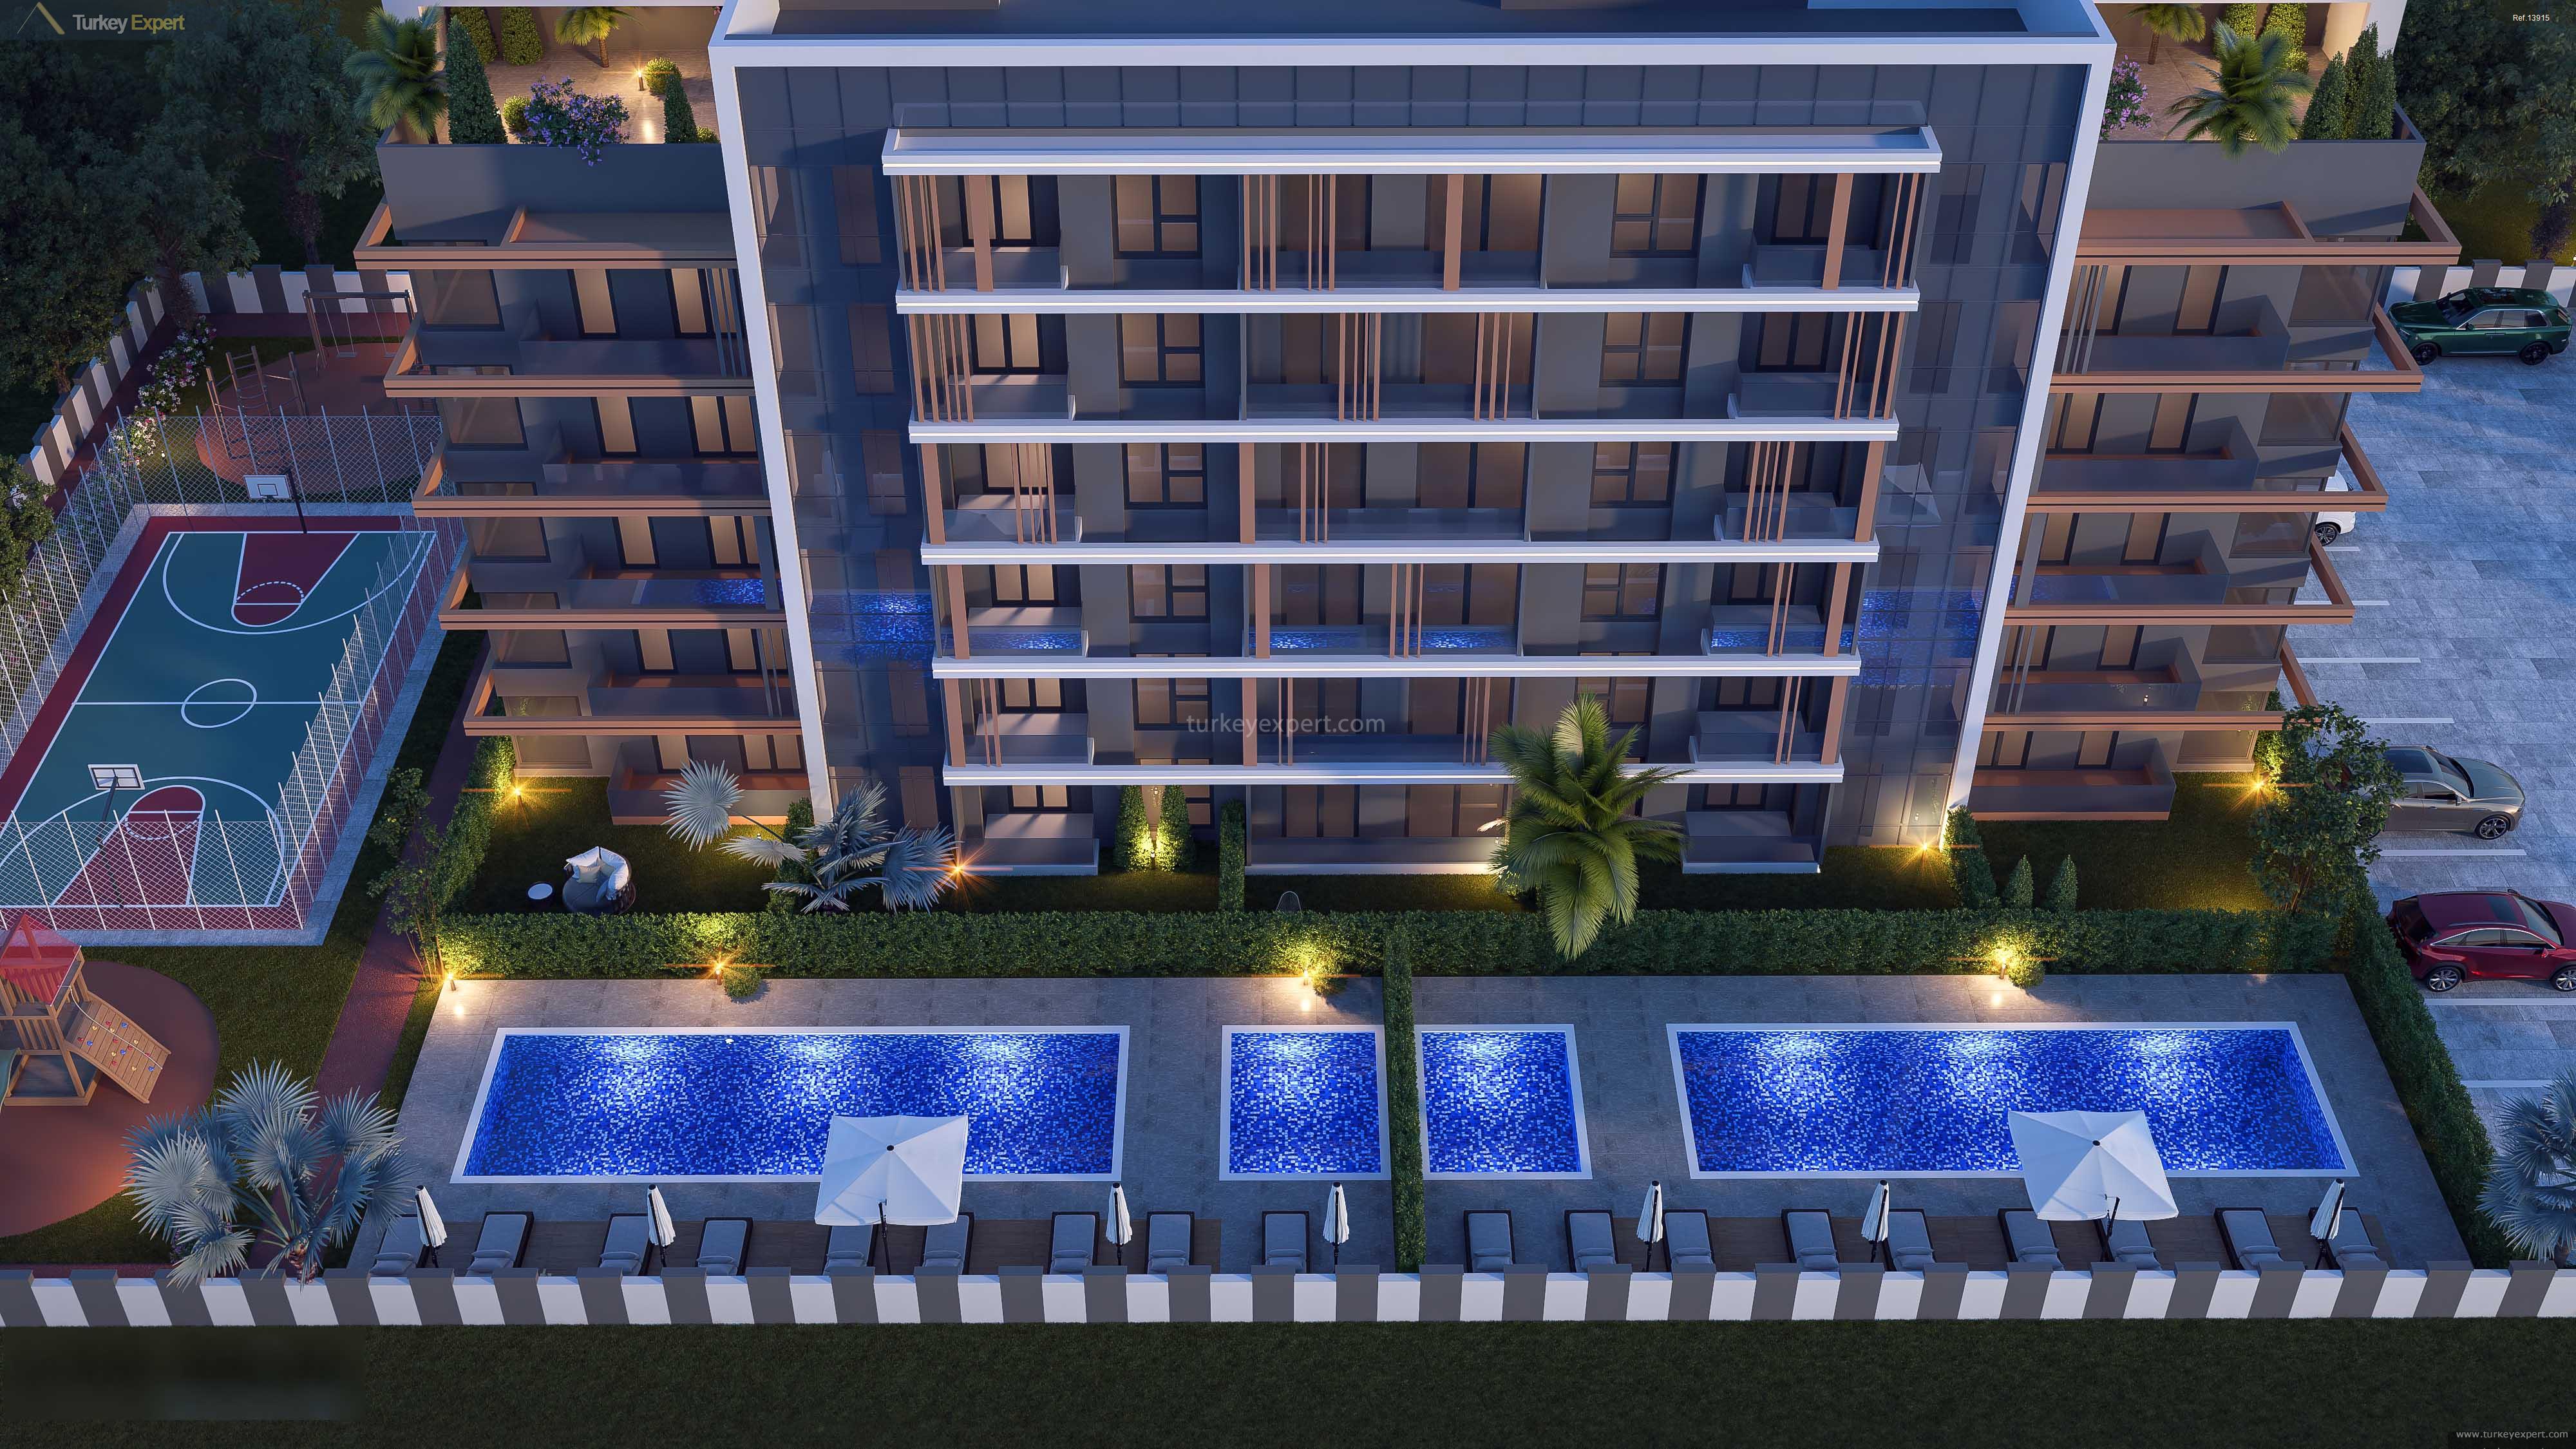 106antalya altintas apartments with a shared pool near the beach23_midpageimg_